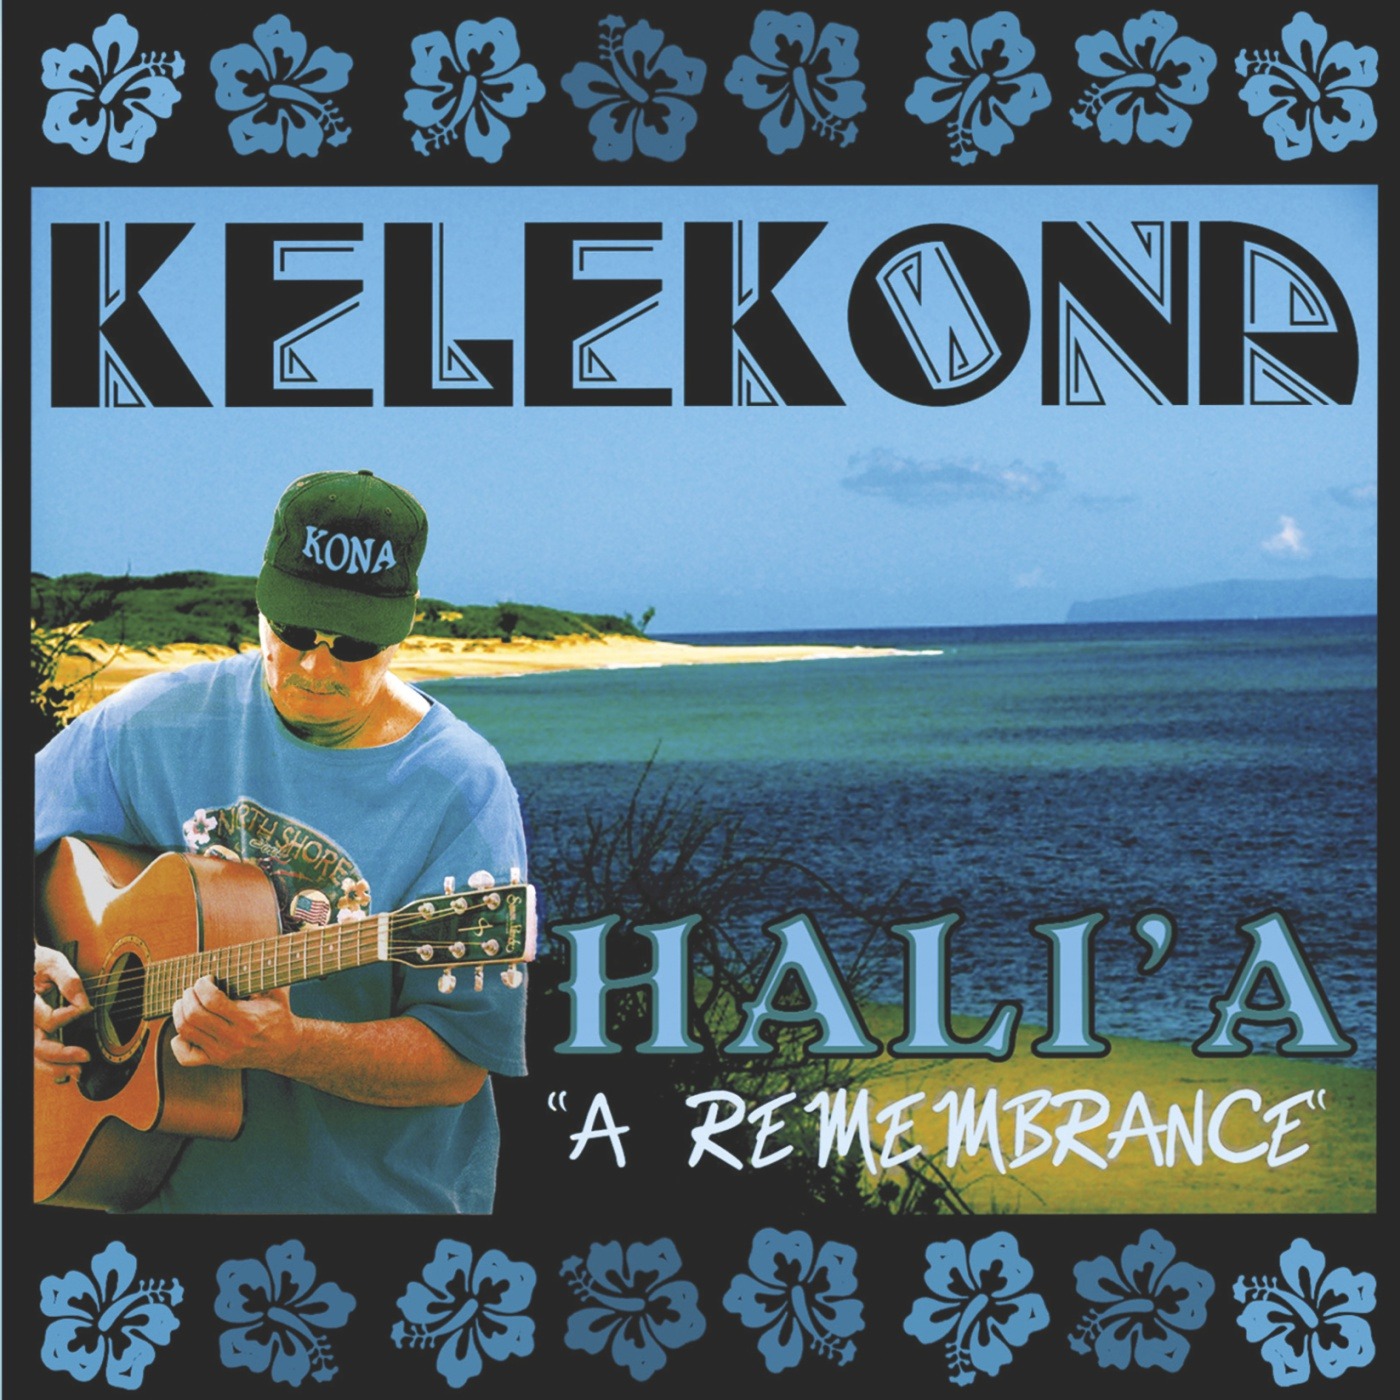 Kelekona’s Hali’a "a Remembrance" - A Musical Journey Through Slack-Key Mastery